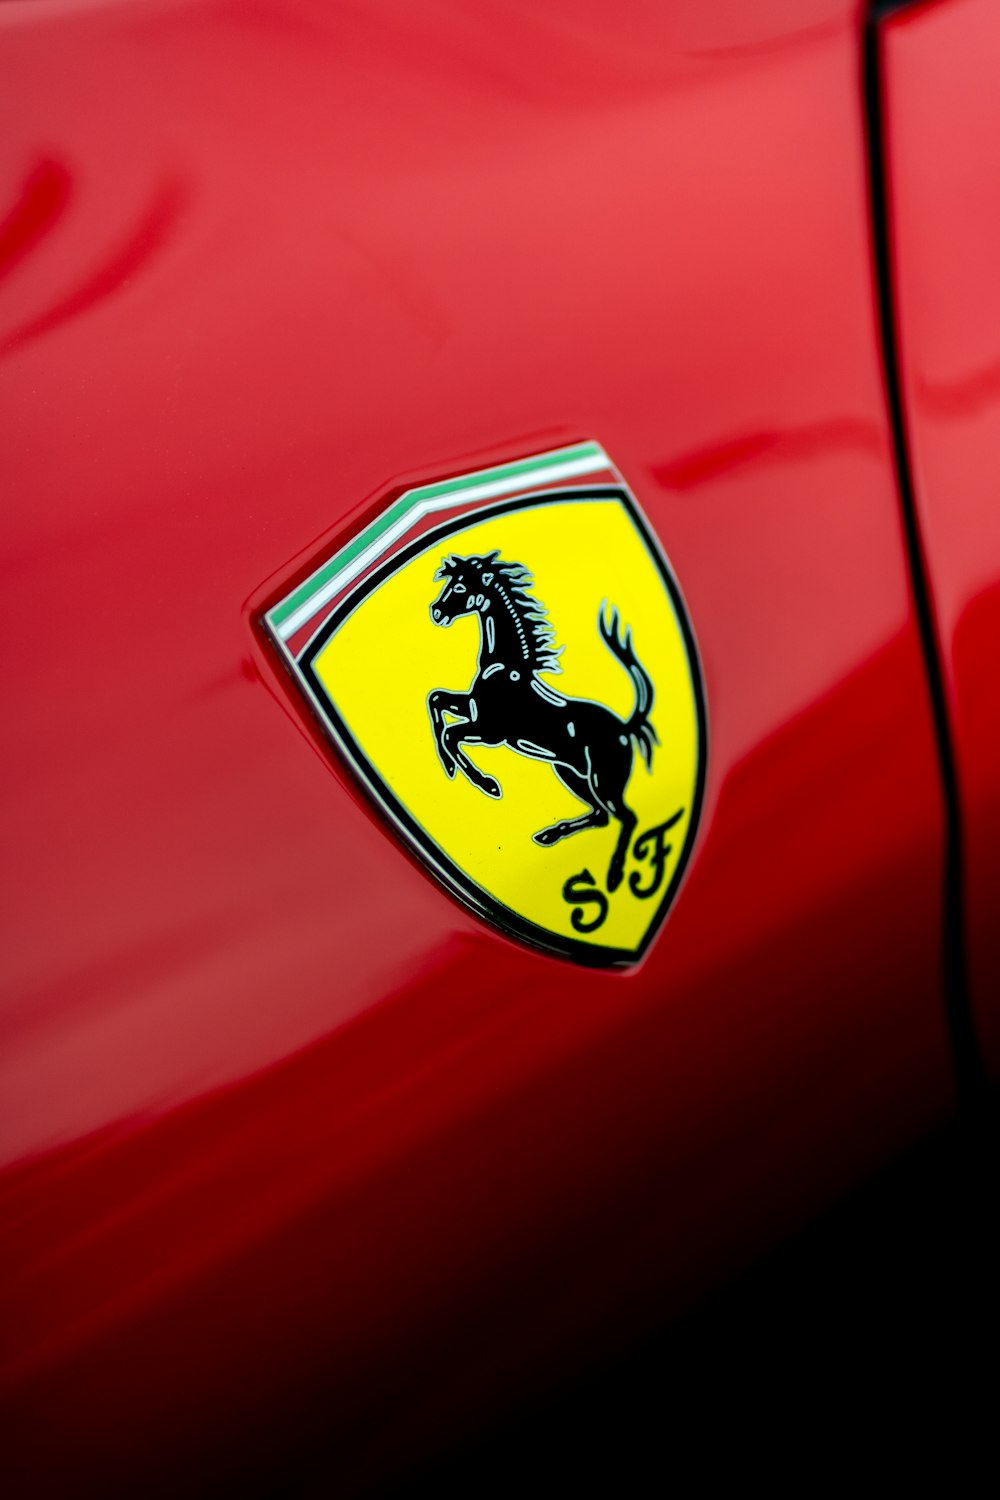 Ferrari Logo Pictures  Download Free Images on Unsplash